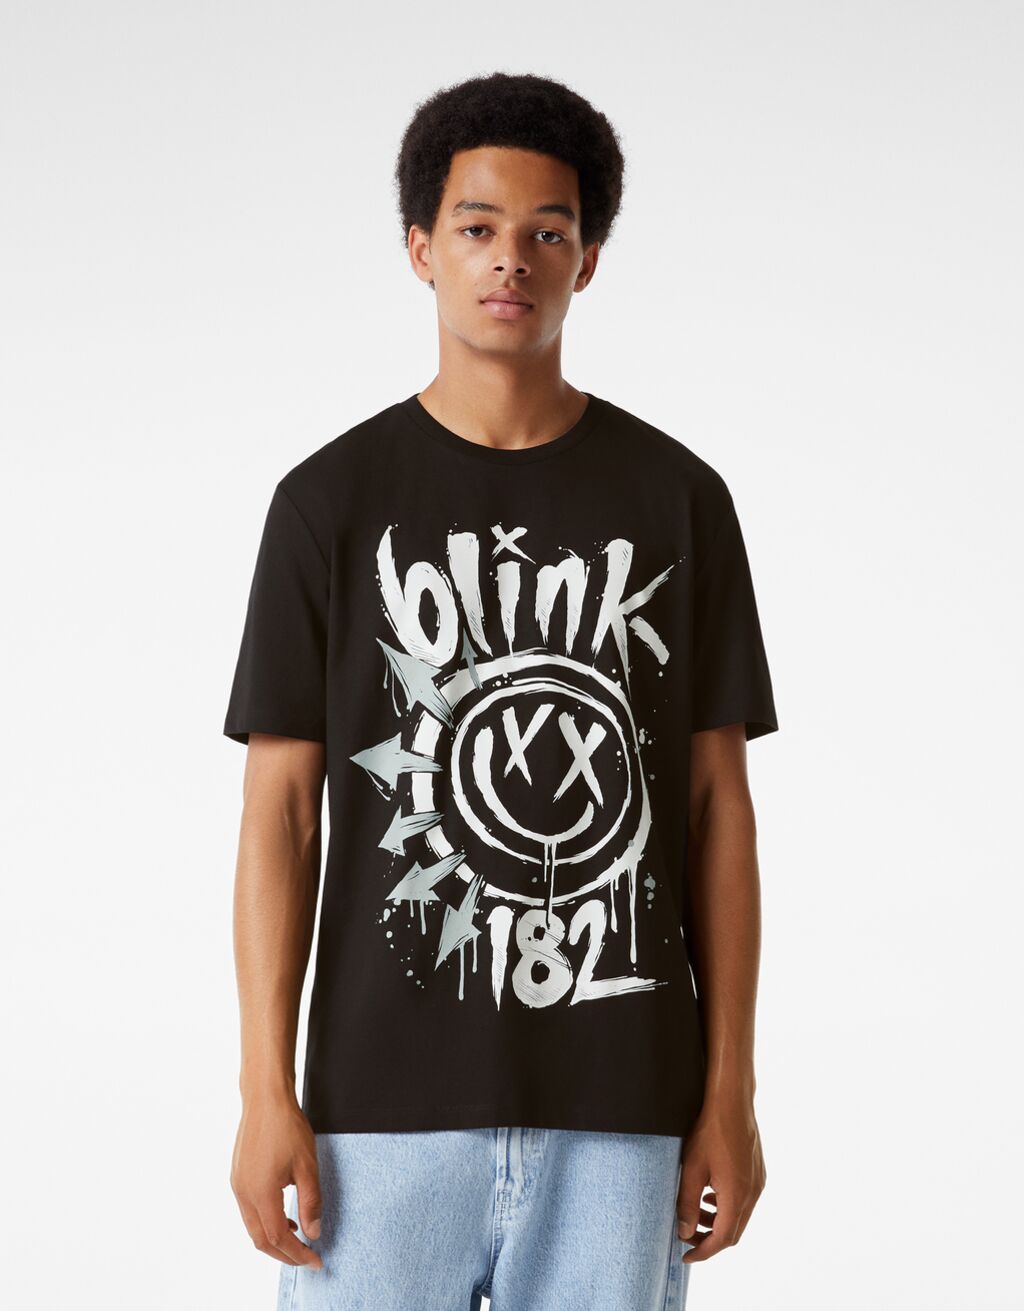 Koszulka regular fit z krótkim rękawem i nadrukiem Blink 182